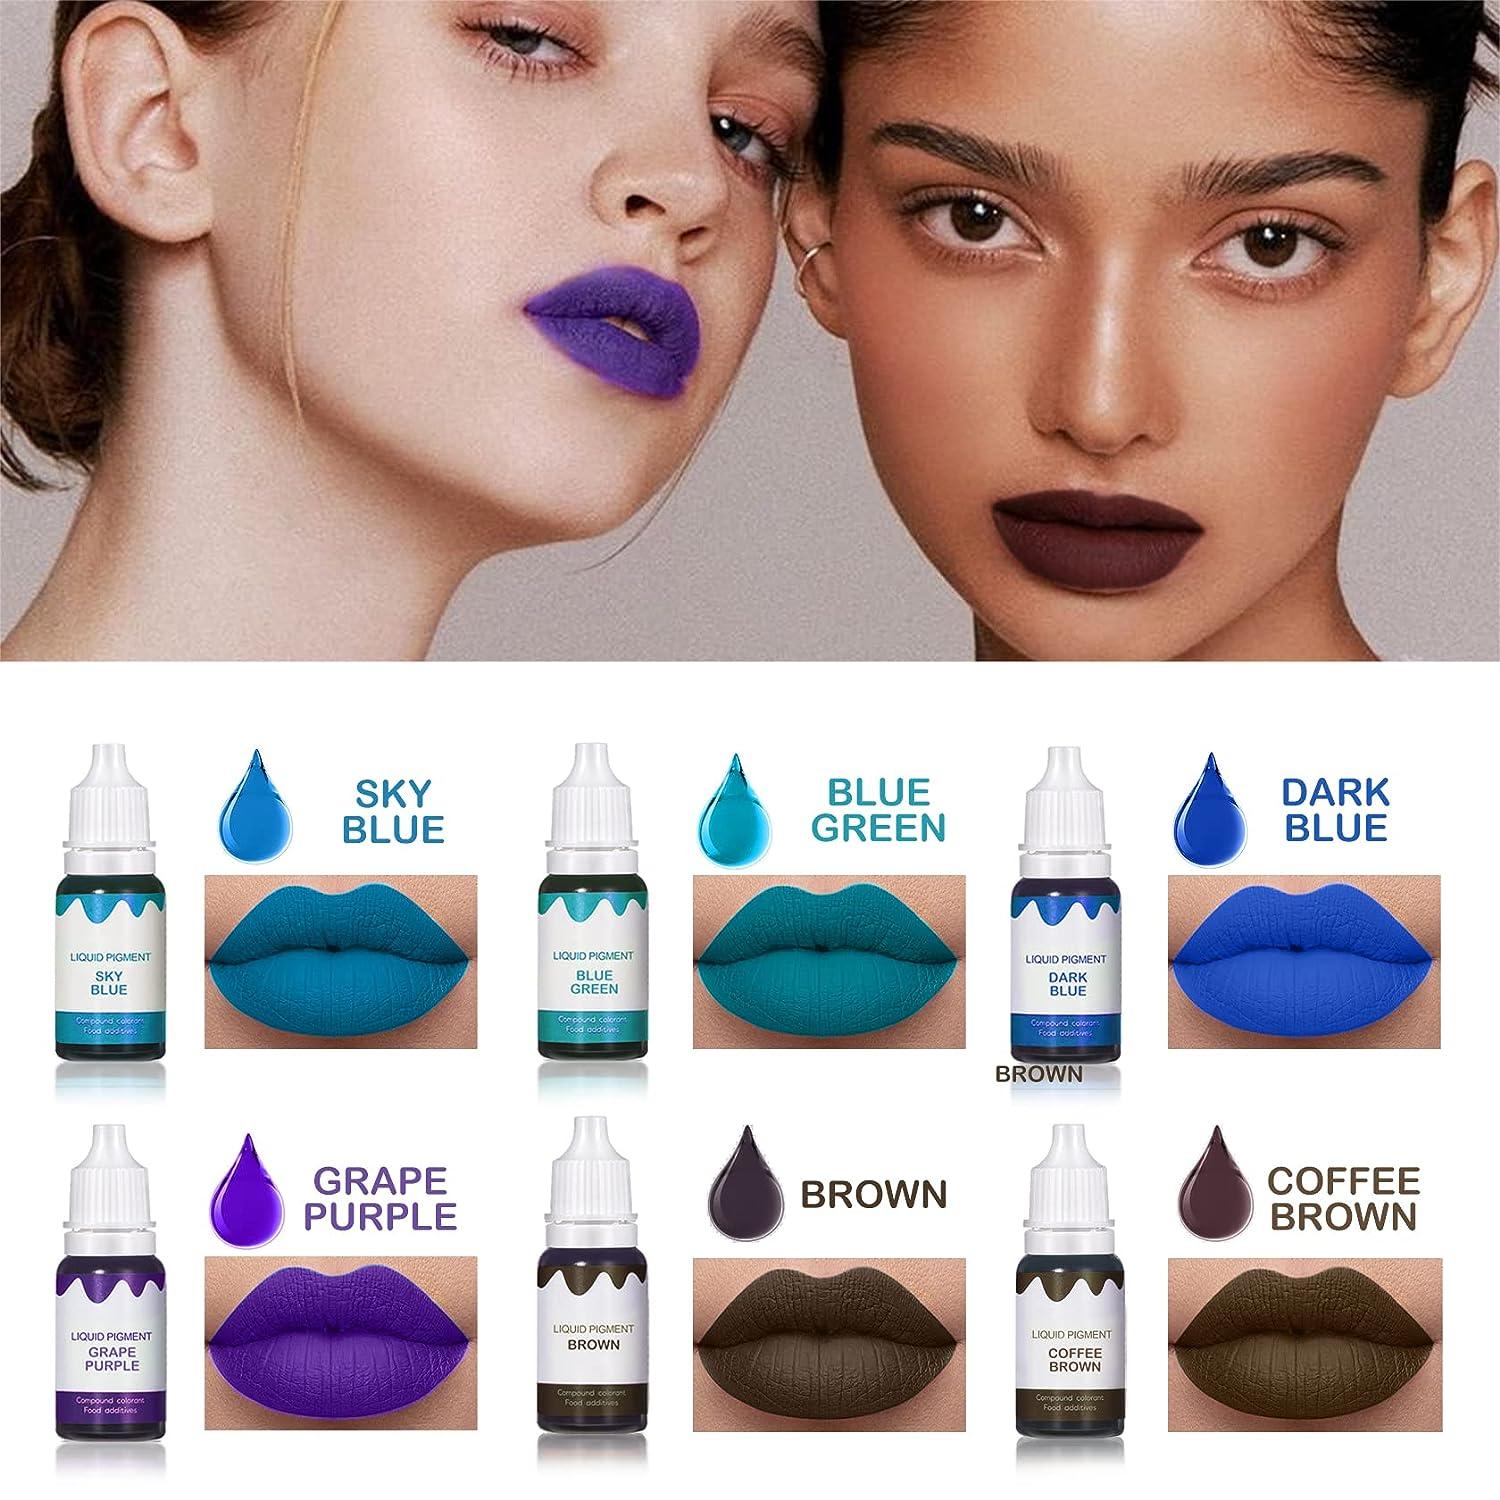 QIUFSSE 12 Colors DIY Lip Gloss Pigment Set Liquid Pigment for Lip